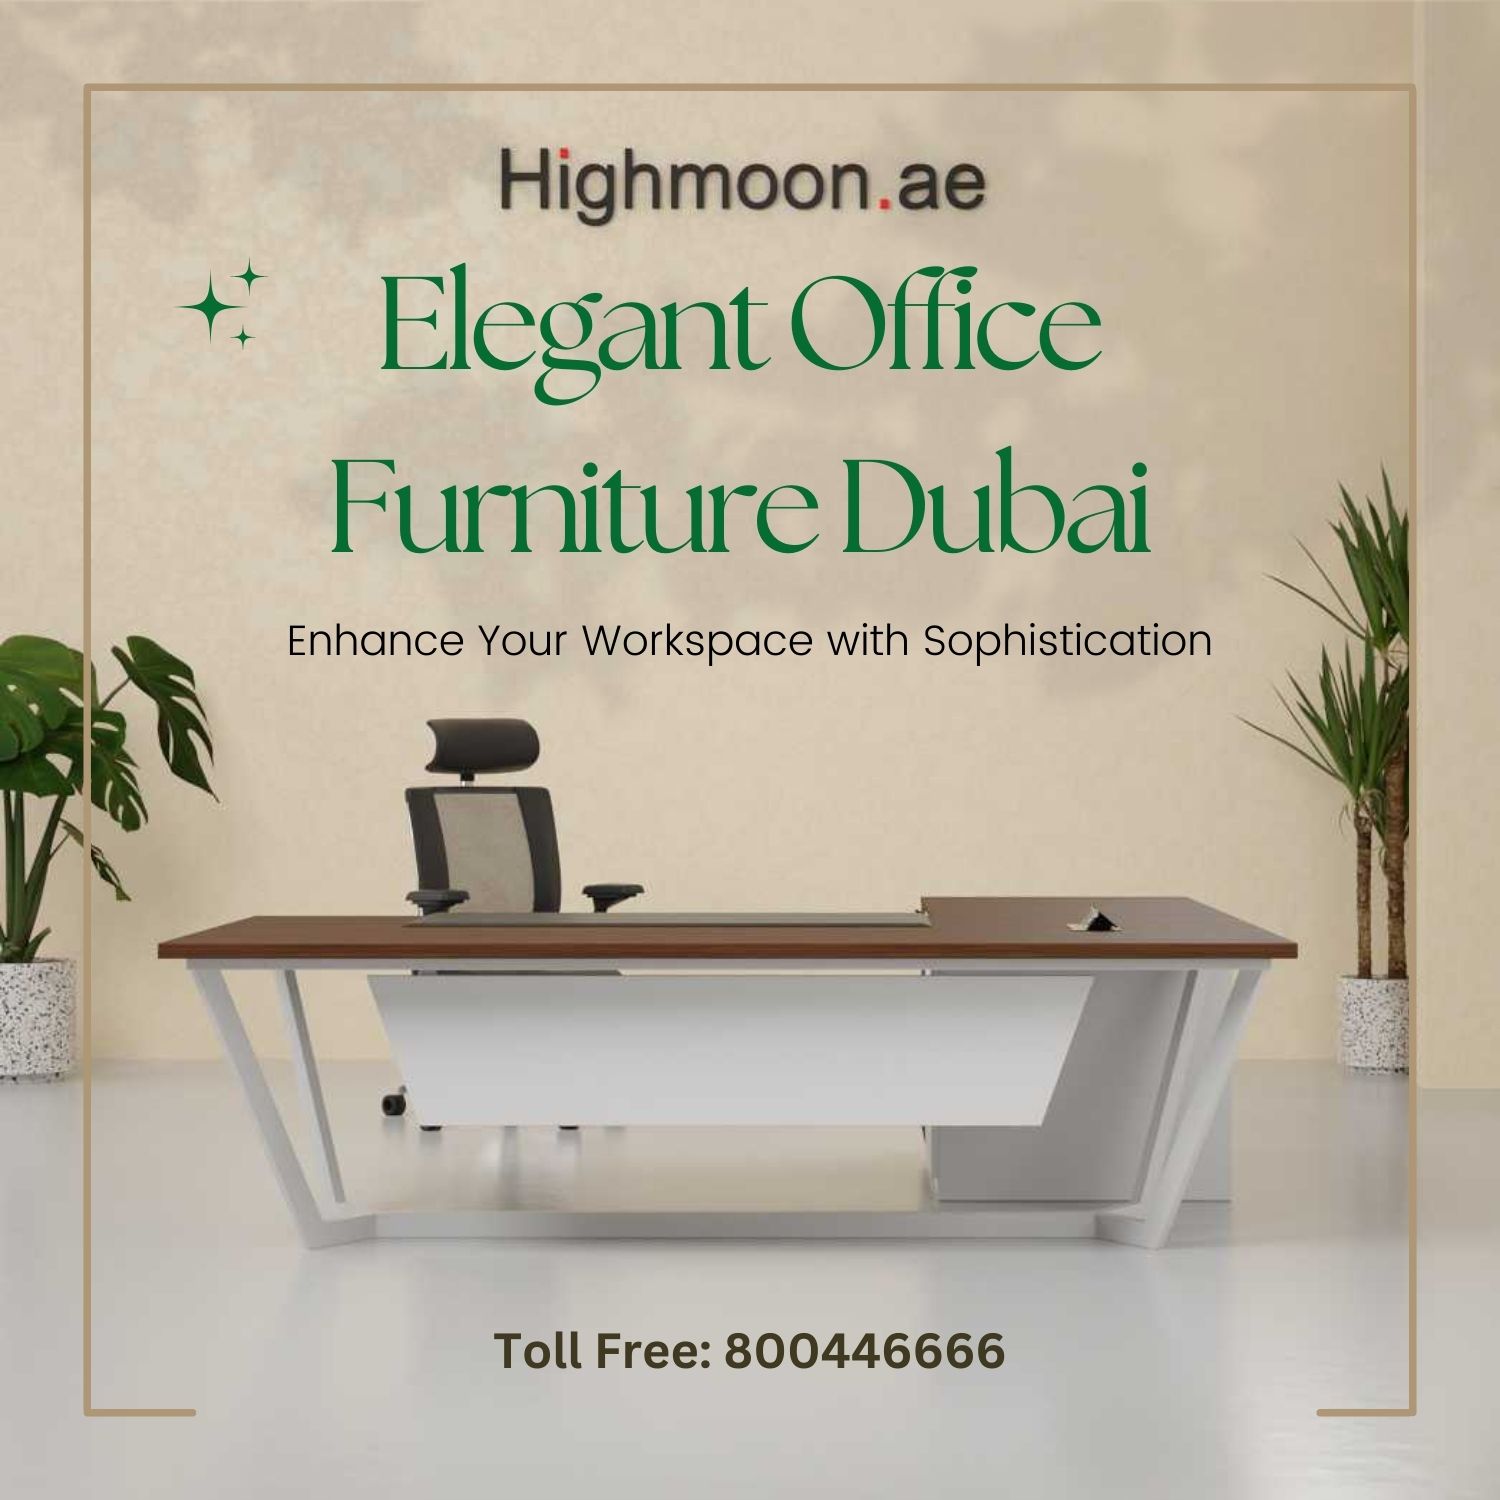 Elegant Office Furniture Dubai Enhance Your Workspace With Sophistication